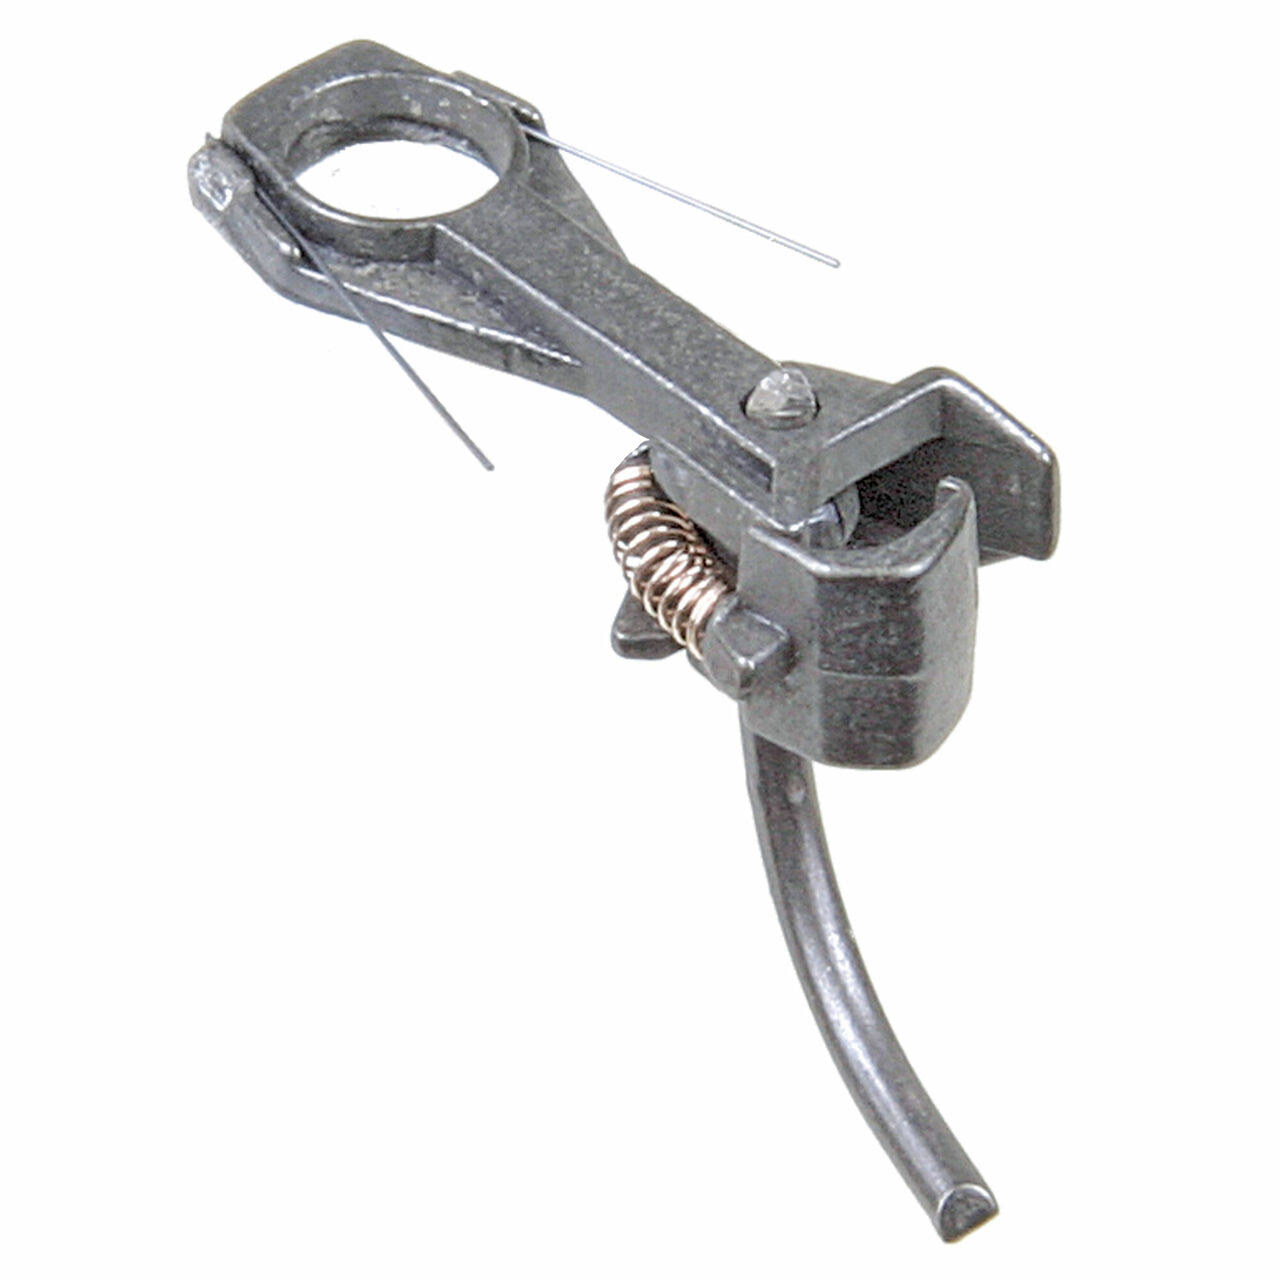 Kadee Qualtiy Product 145 Magne-Matic Standard Head Metal Whisker Coupler